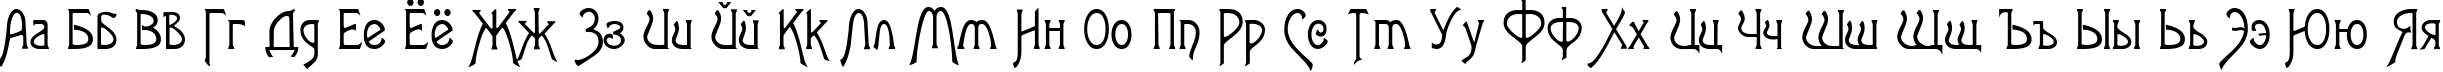 Пример написания русского алфавита шрифтом Agatha-Modern